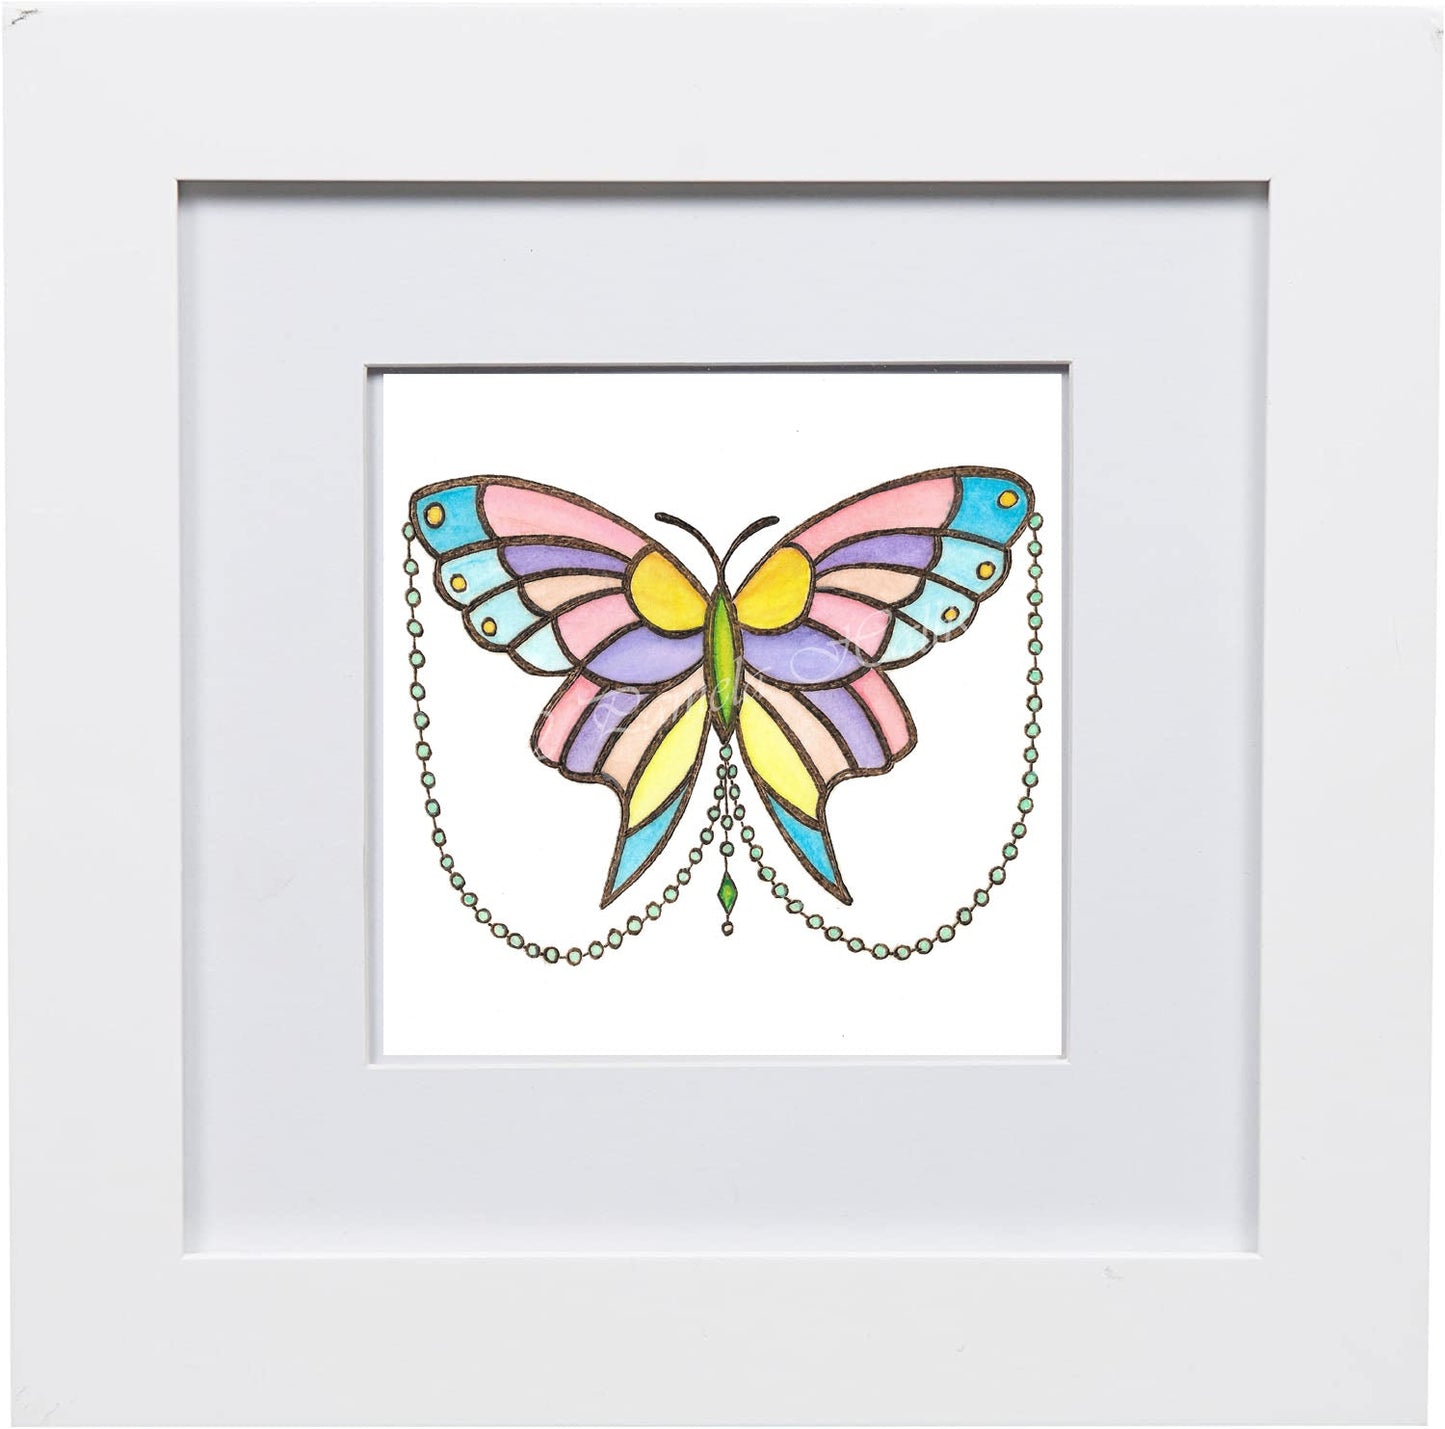 Butterfly Art Giclee by Pamela Hallisey - 4x4 art print.